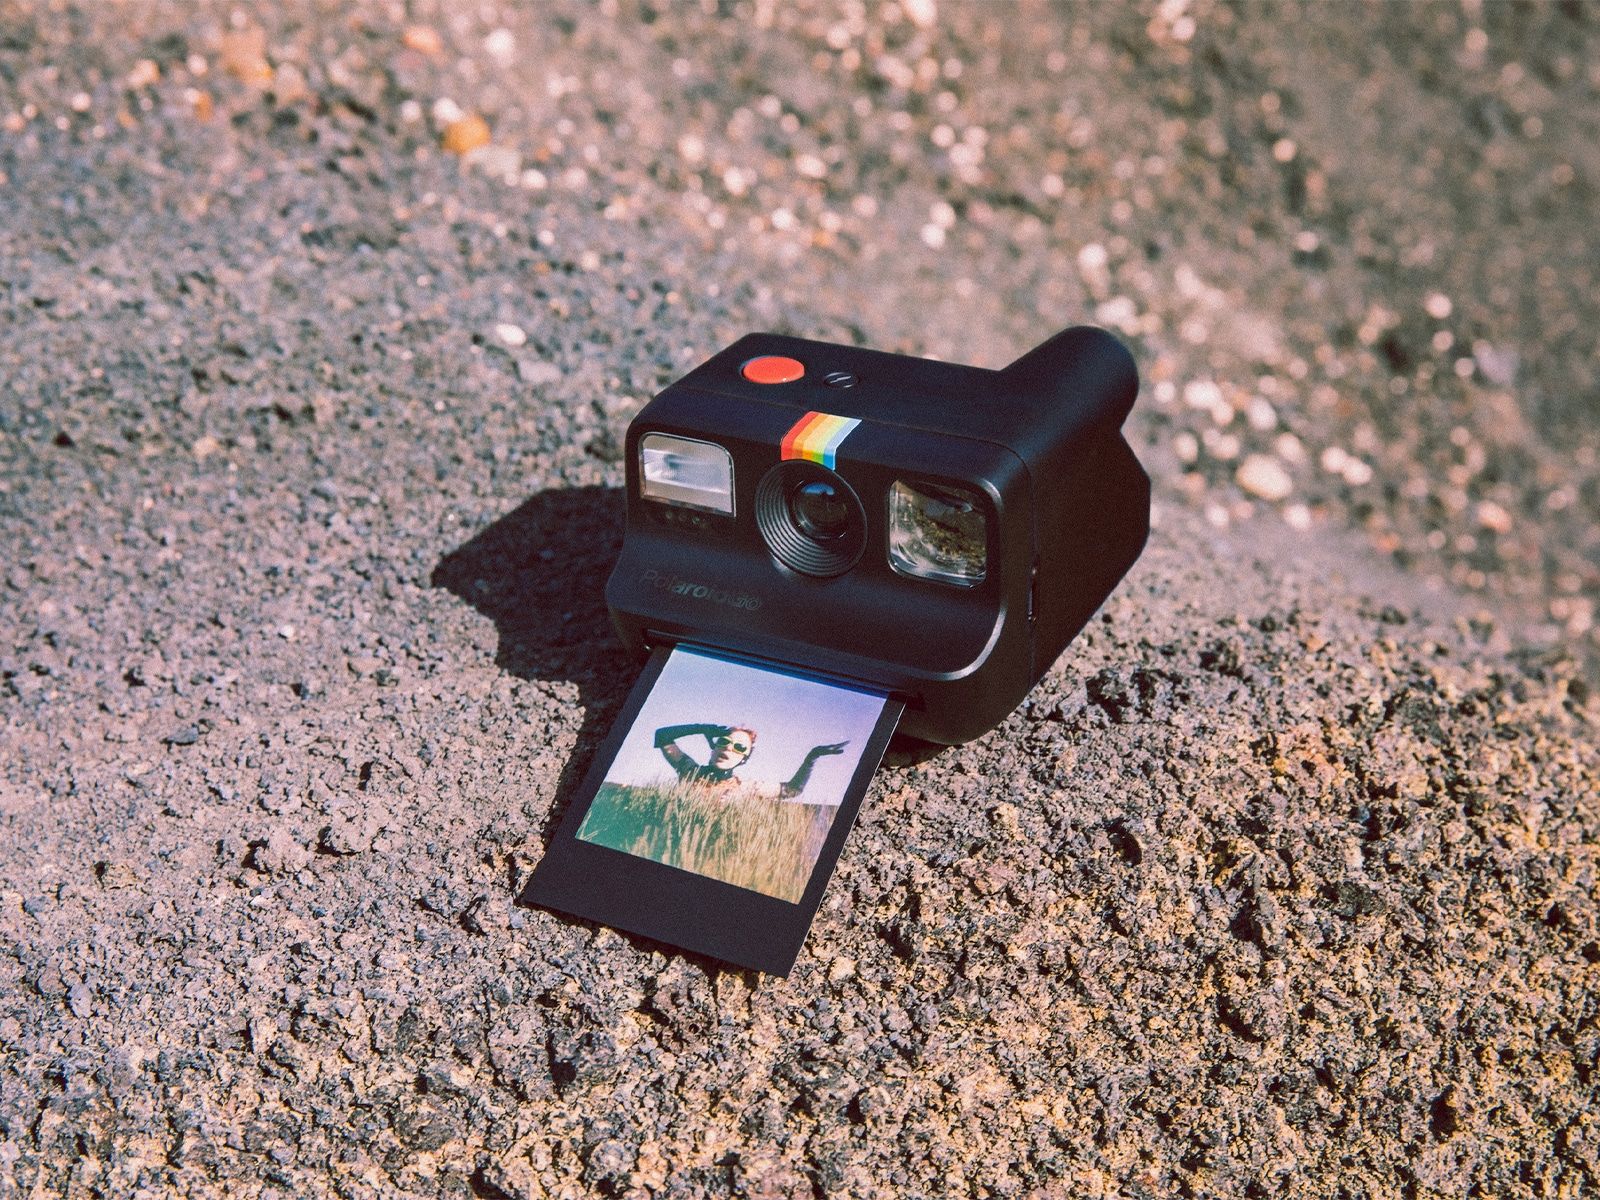 Polaroid Go White, Cámara instantánea analógica